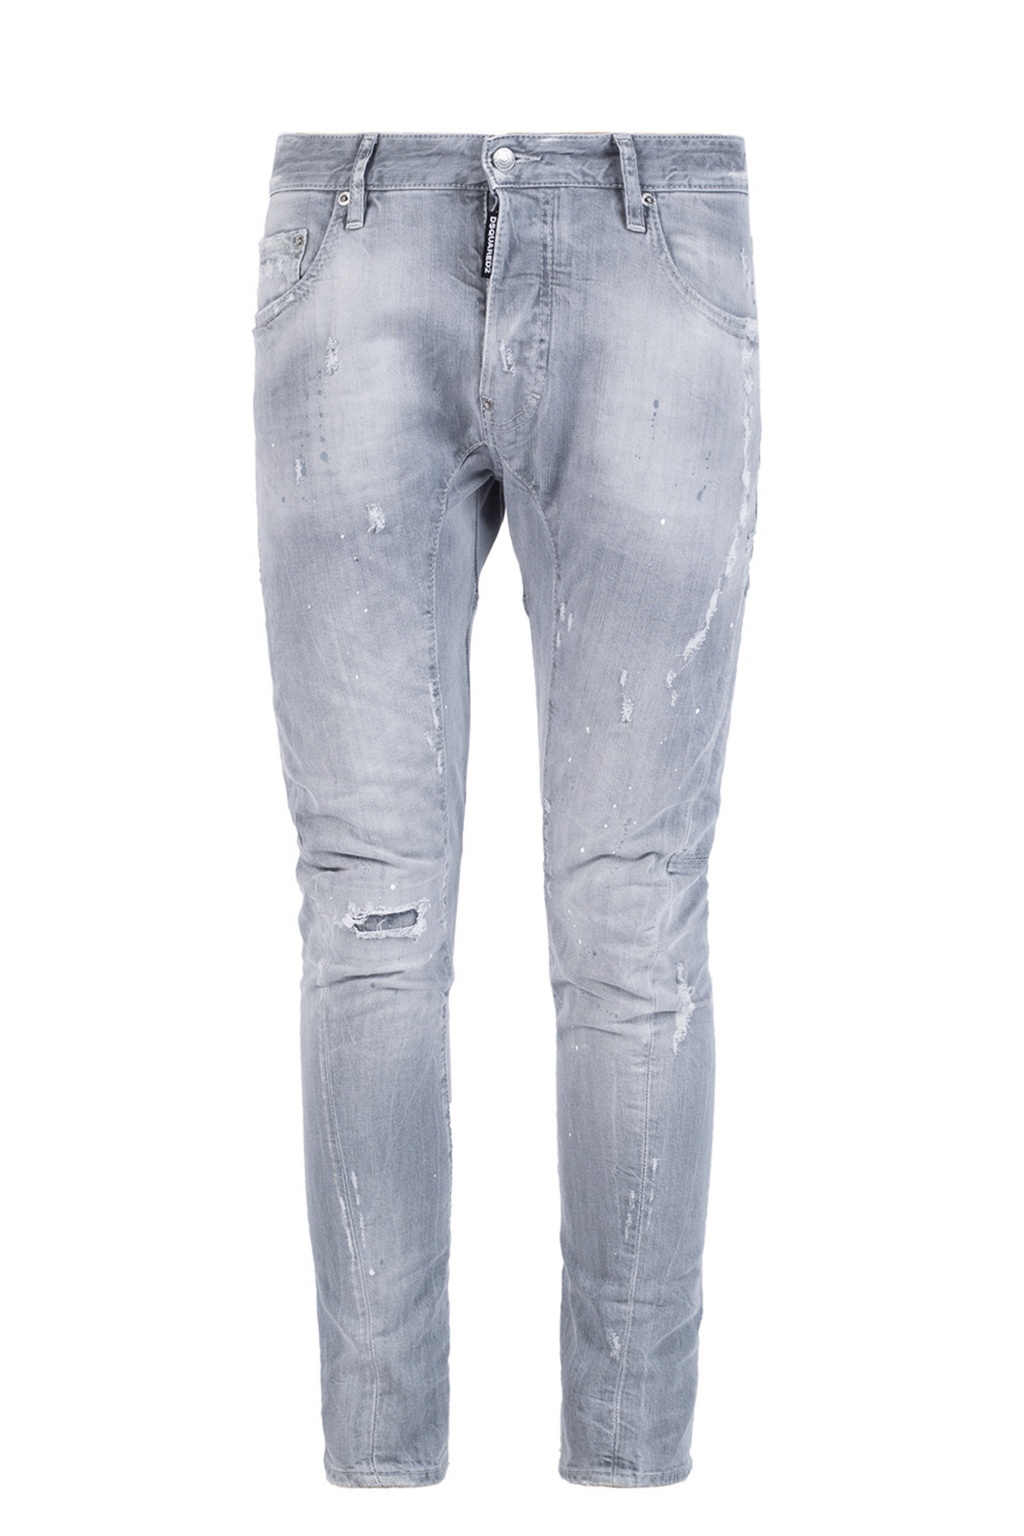 Dsquared2 'Tidy Biker Jean' jeans | Men's Clothing | Vitkac